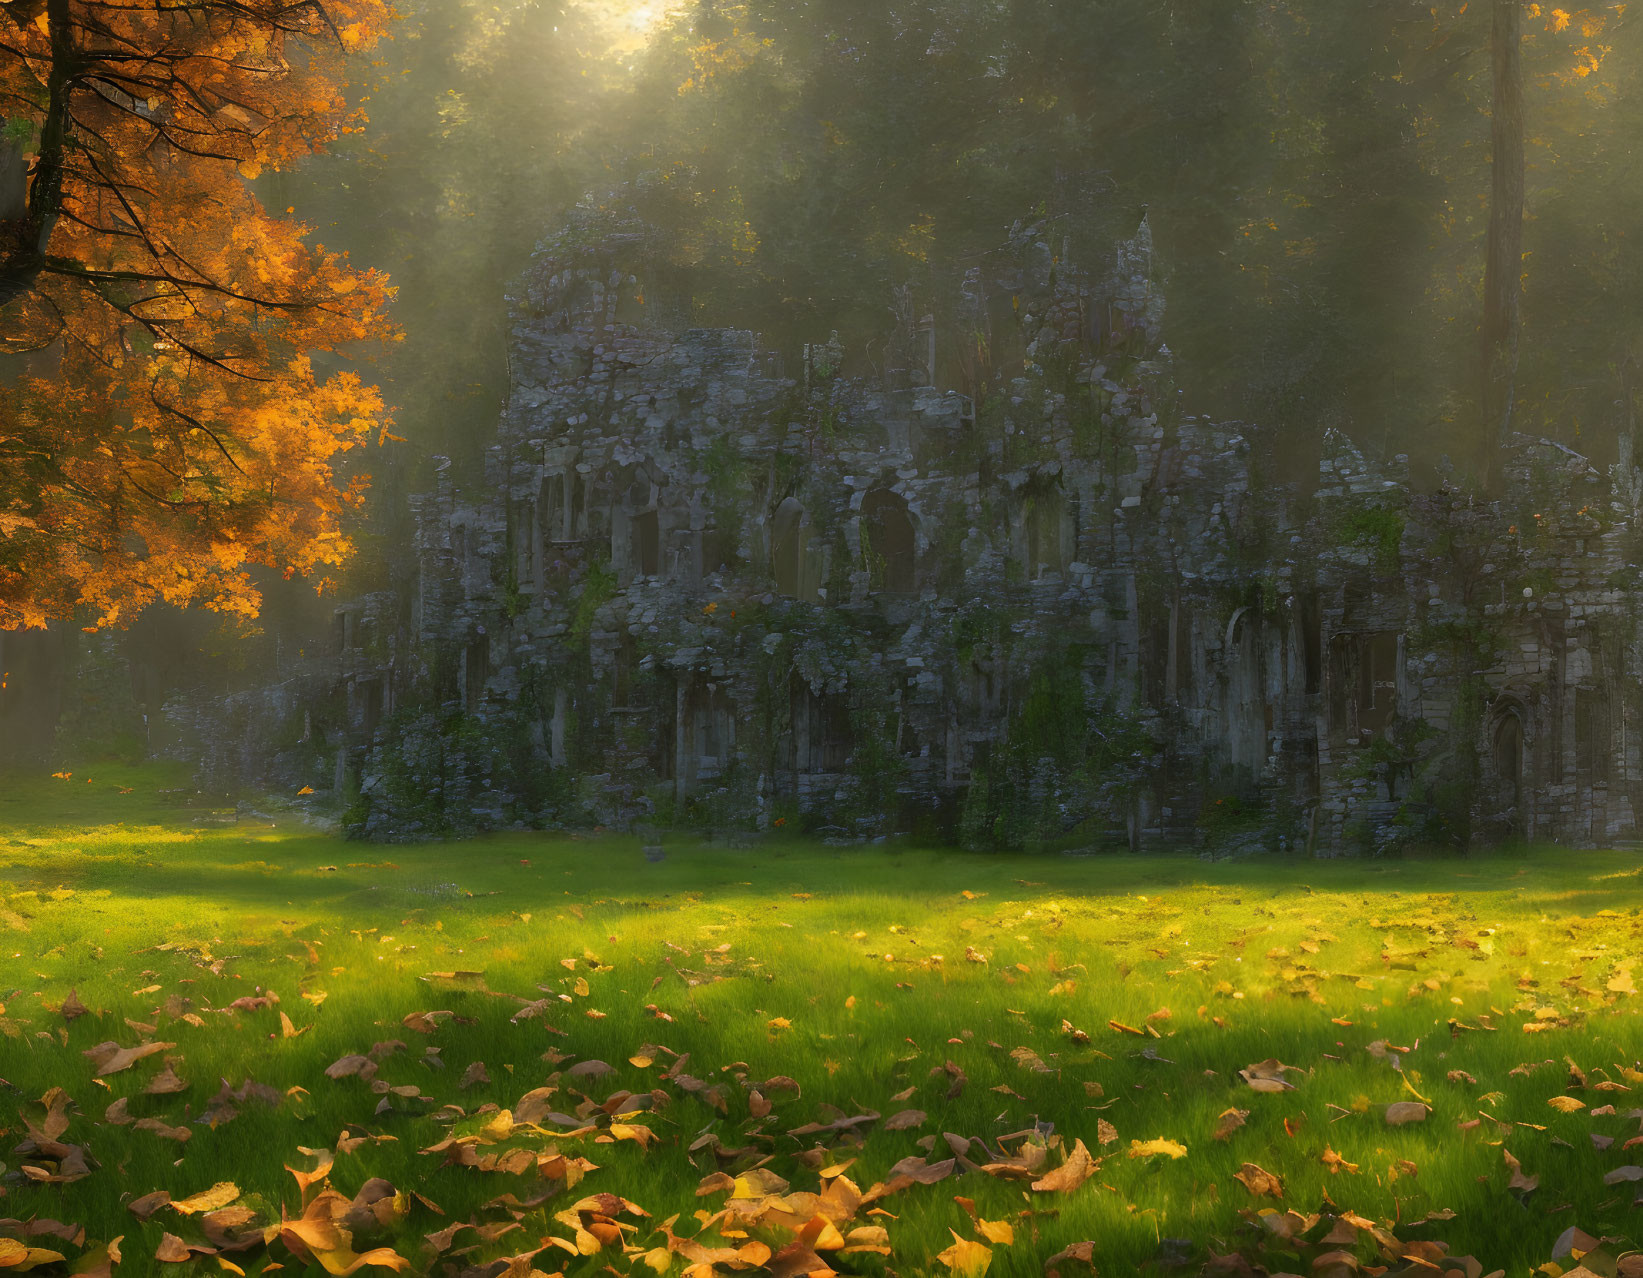 Overgrown ancient ruin in golden sunlight among fallen leaves